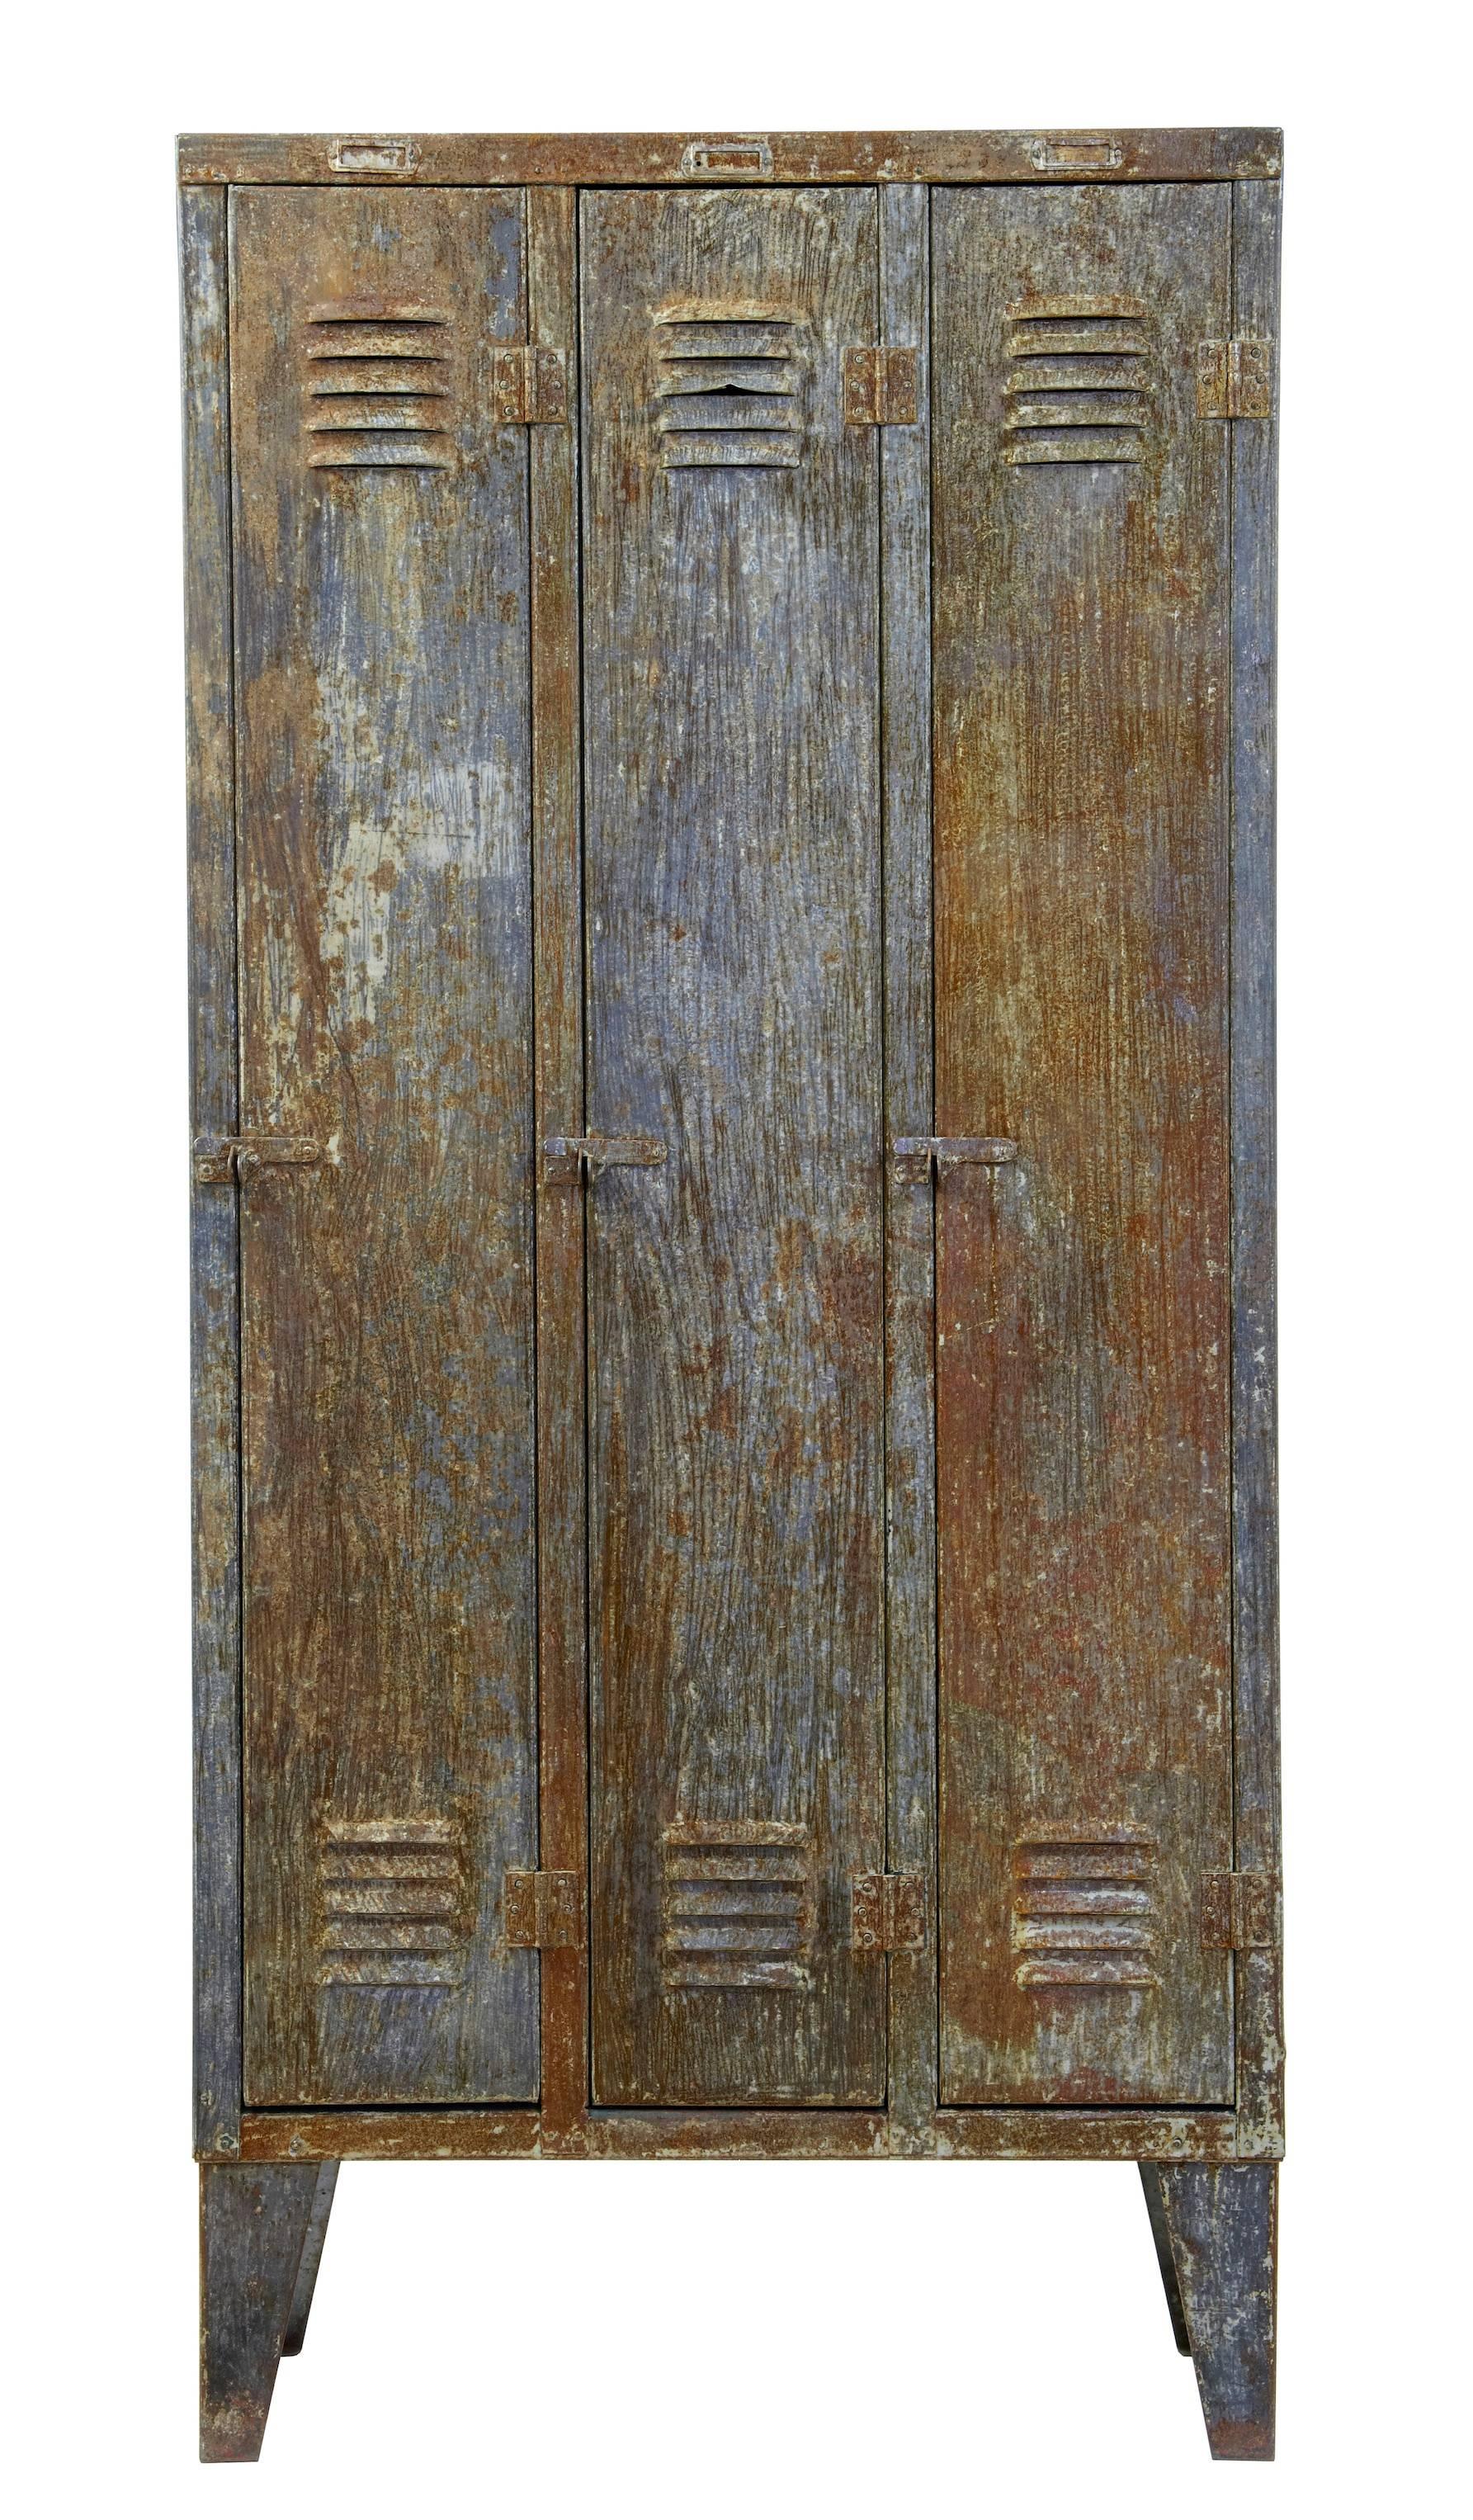 Three door 1960s locker room cabinet with distressed finish.
Measure: Height 78 3/4